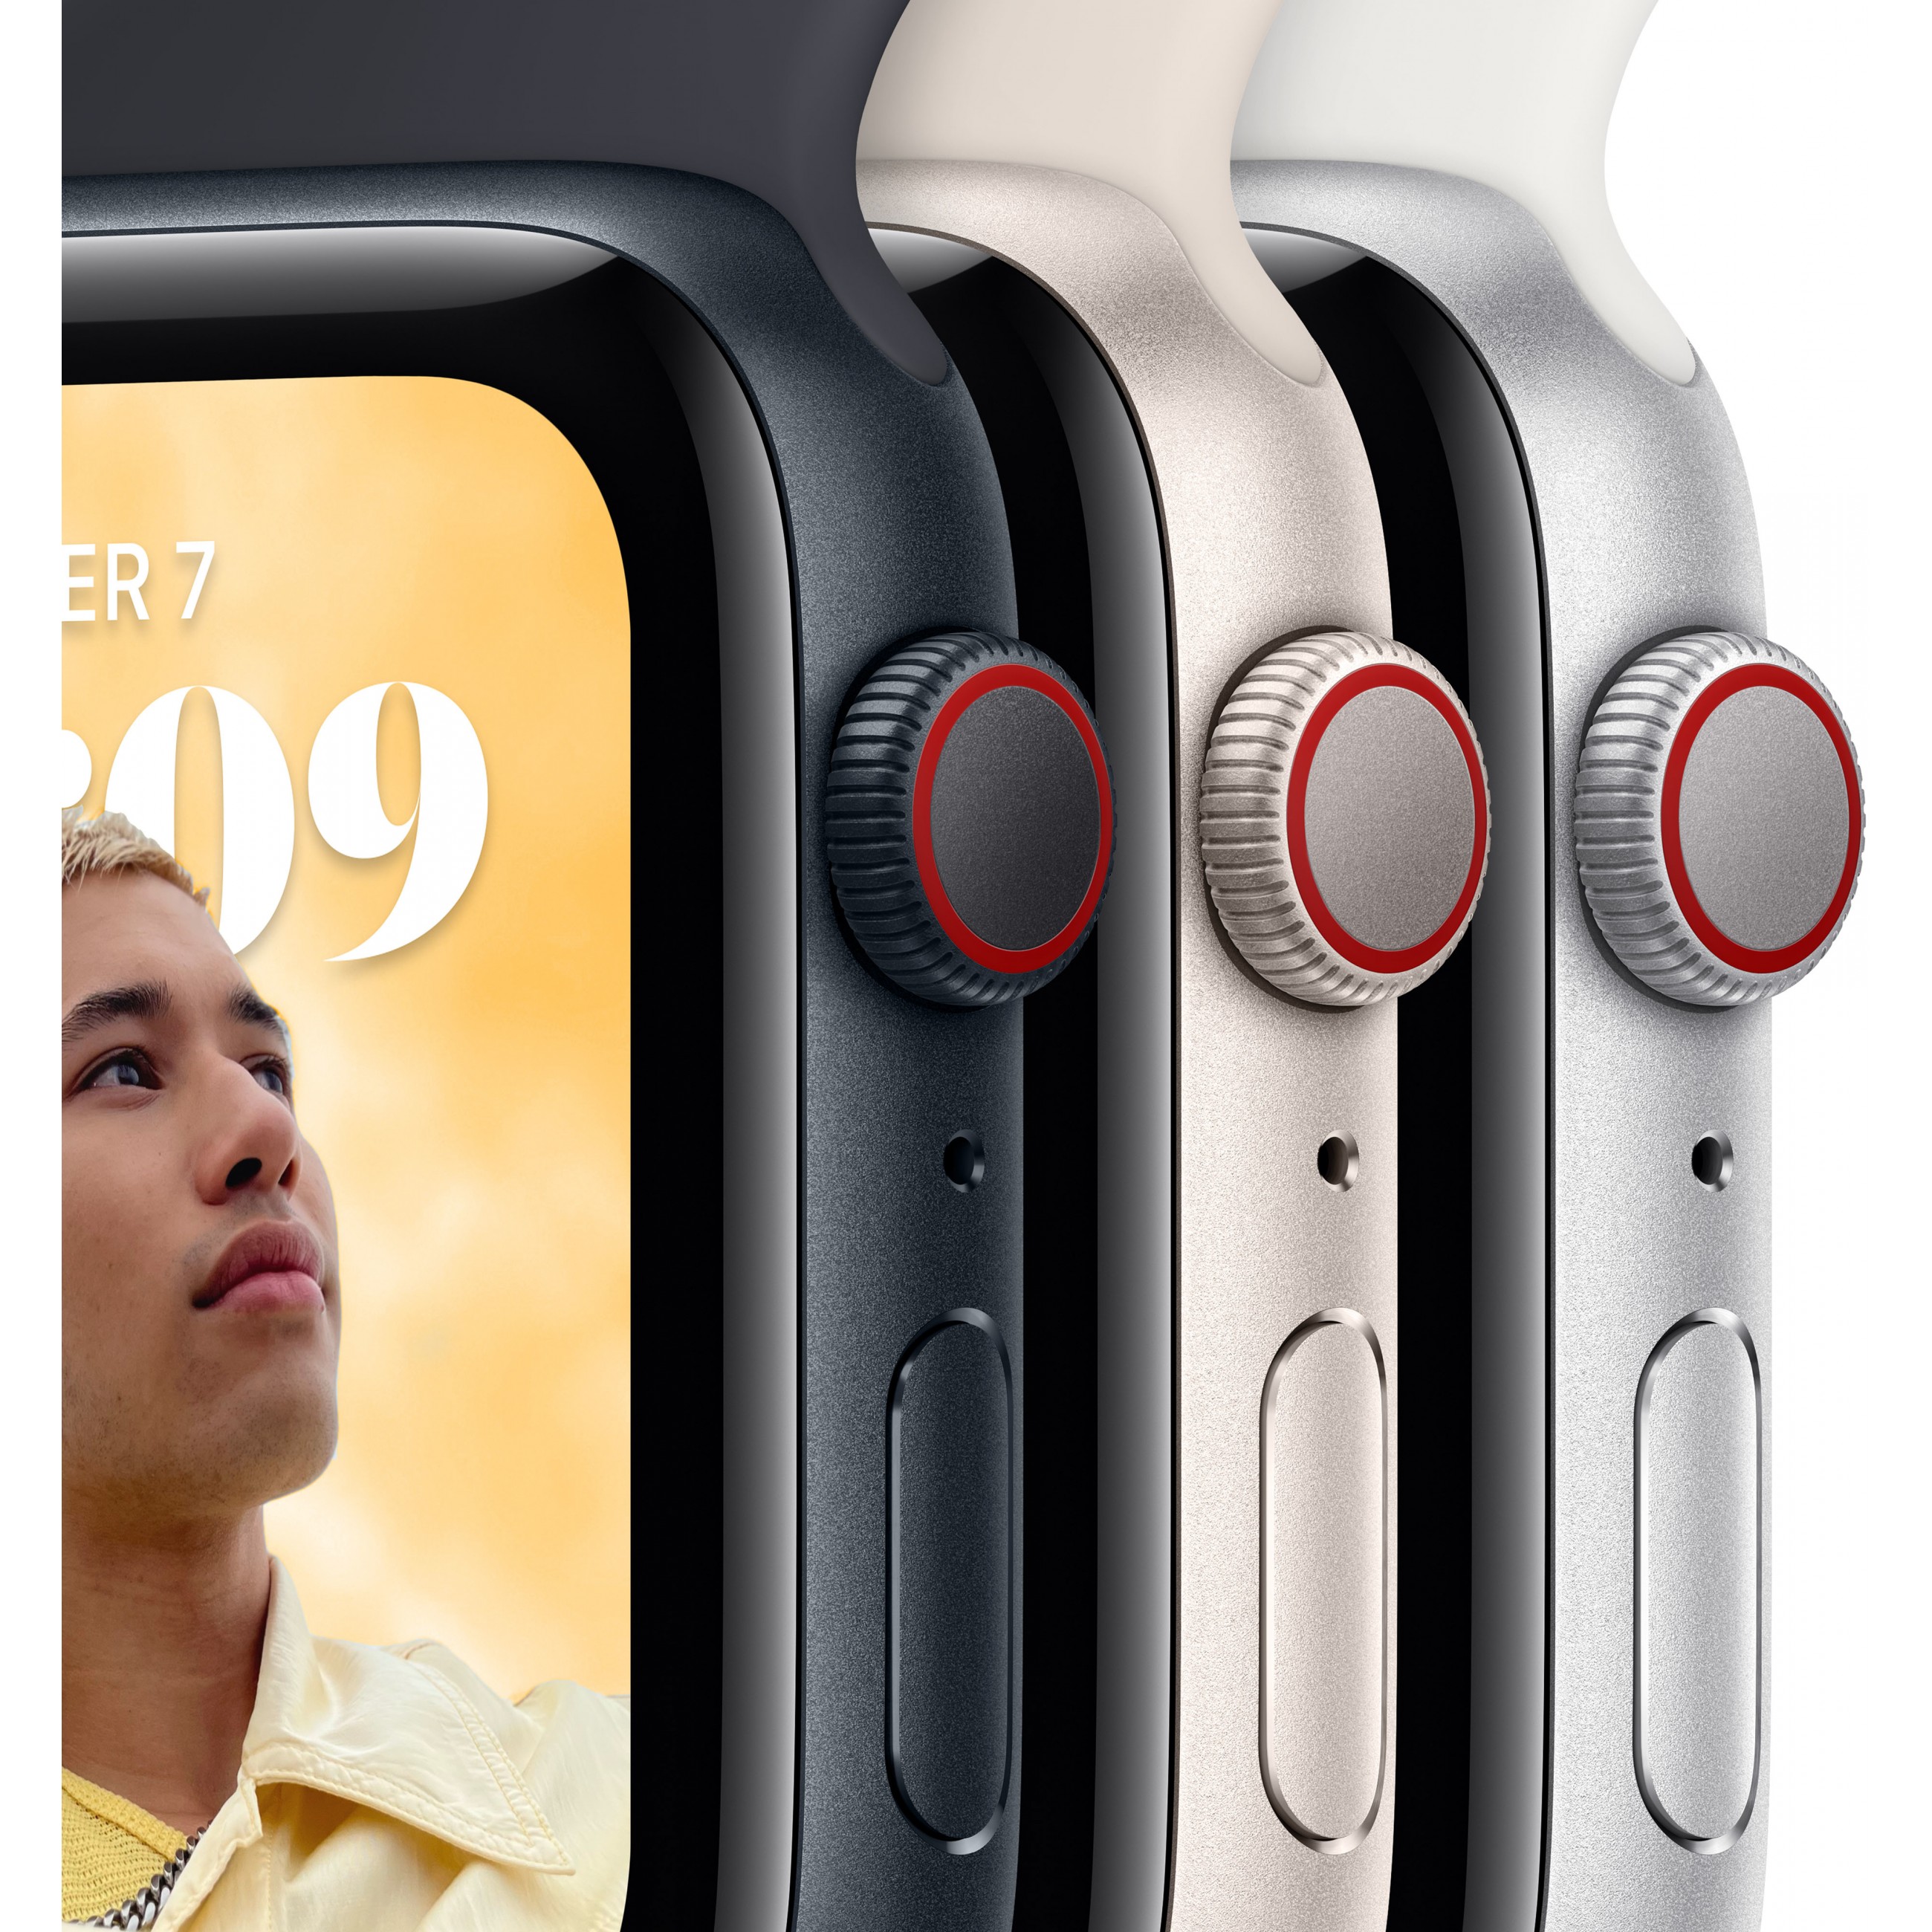 Apple Watch SE OLED 44 mm 4G Biege GPS